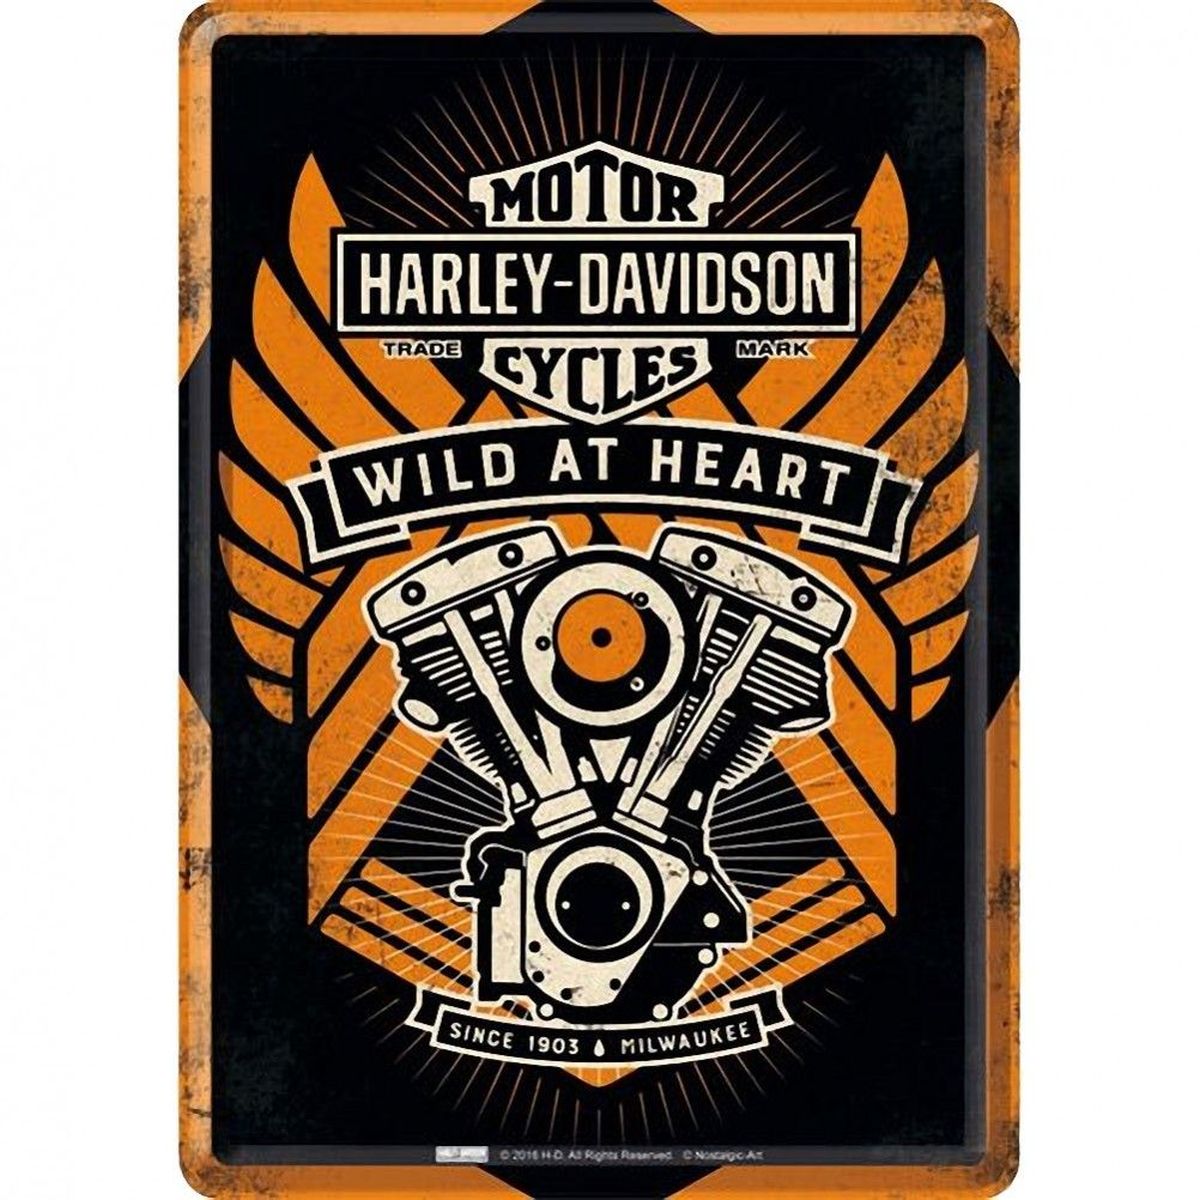 Harley Davidson Wild at Heart small metal plate